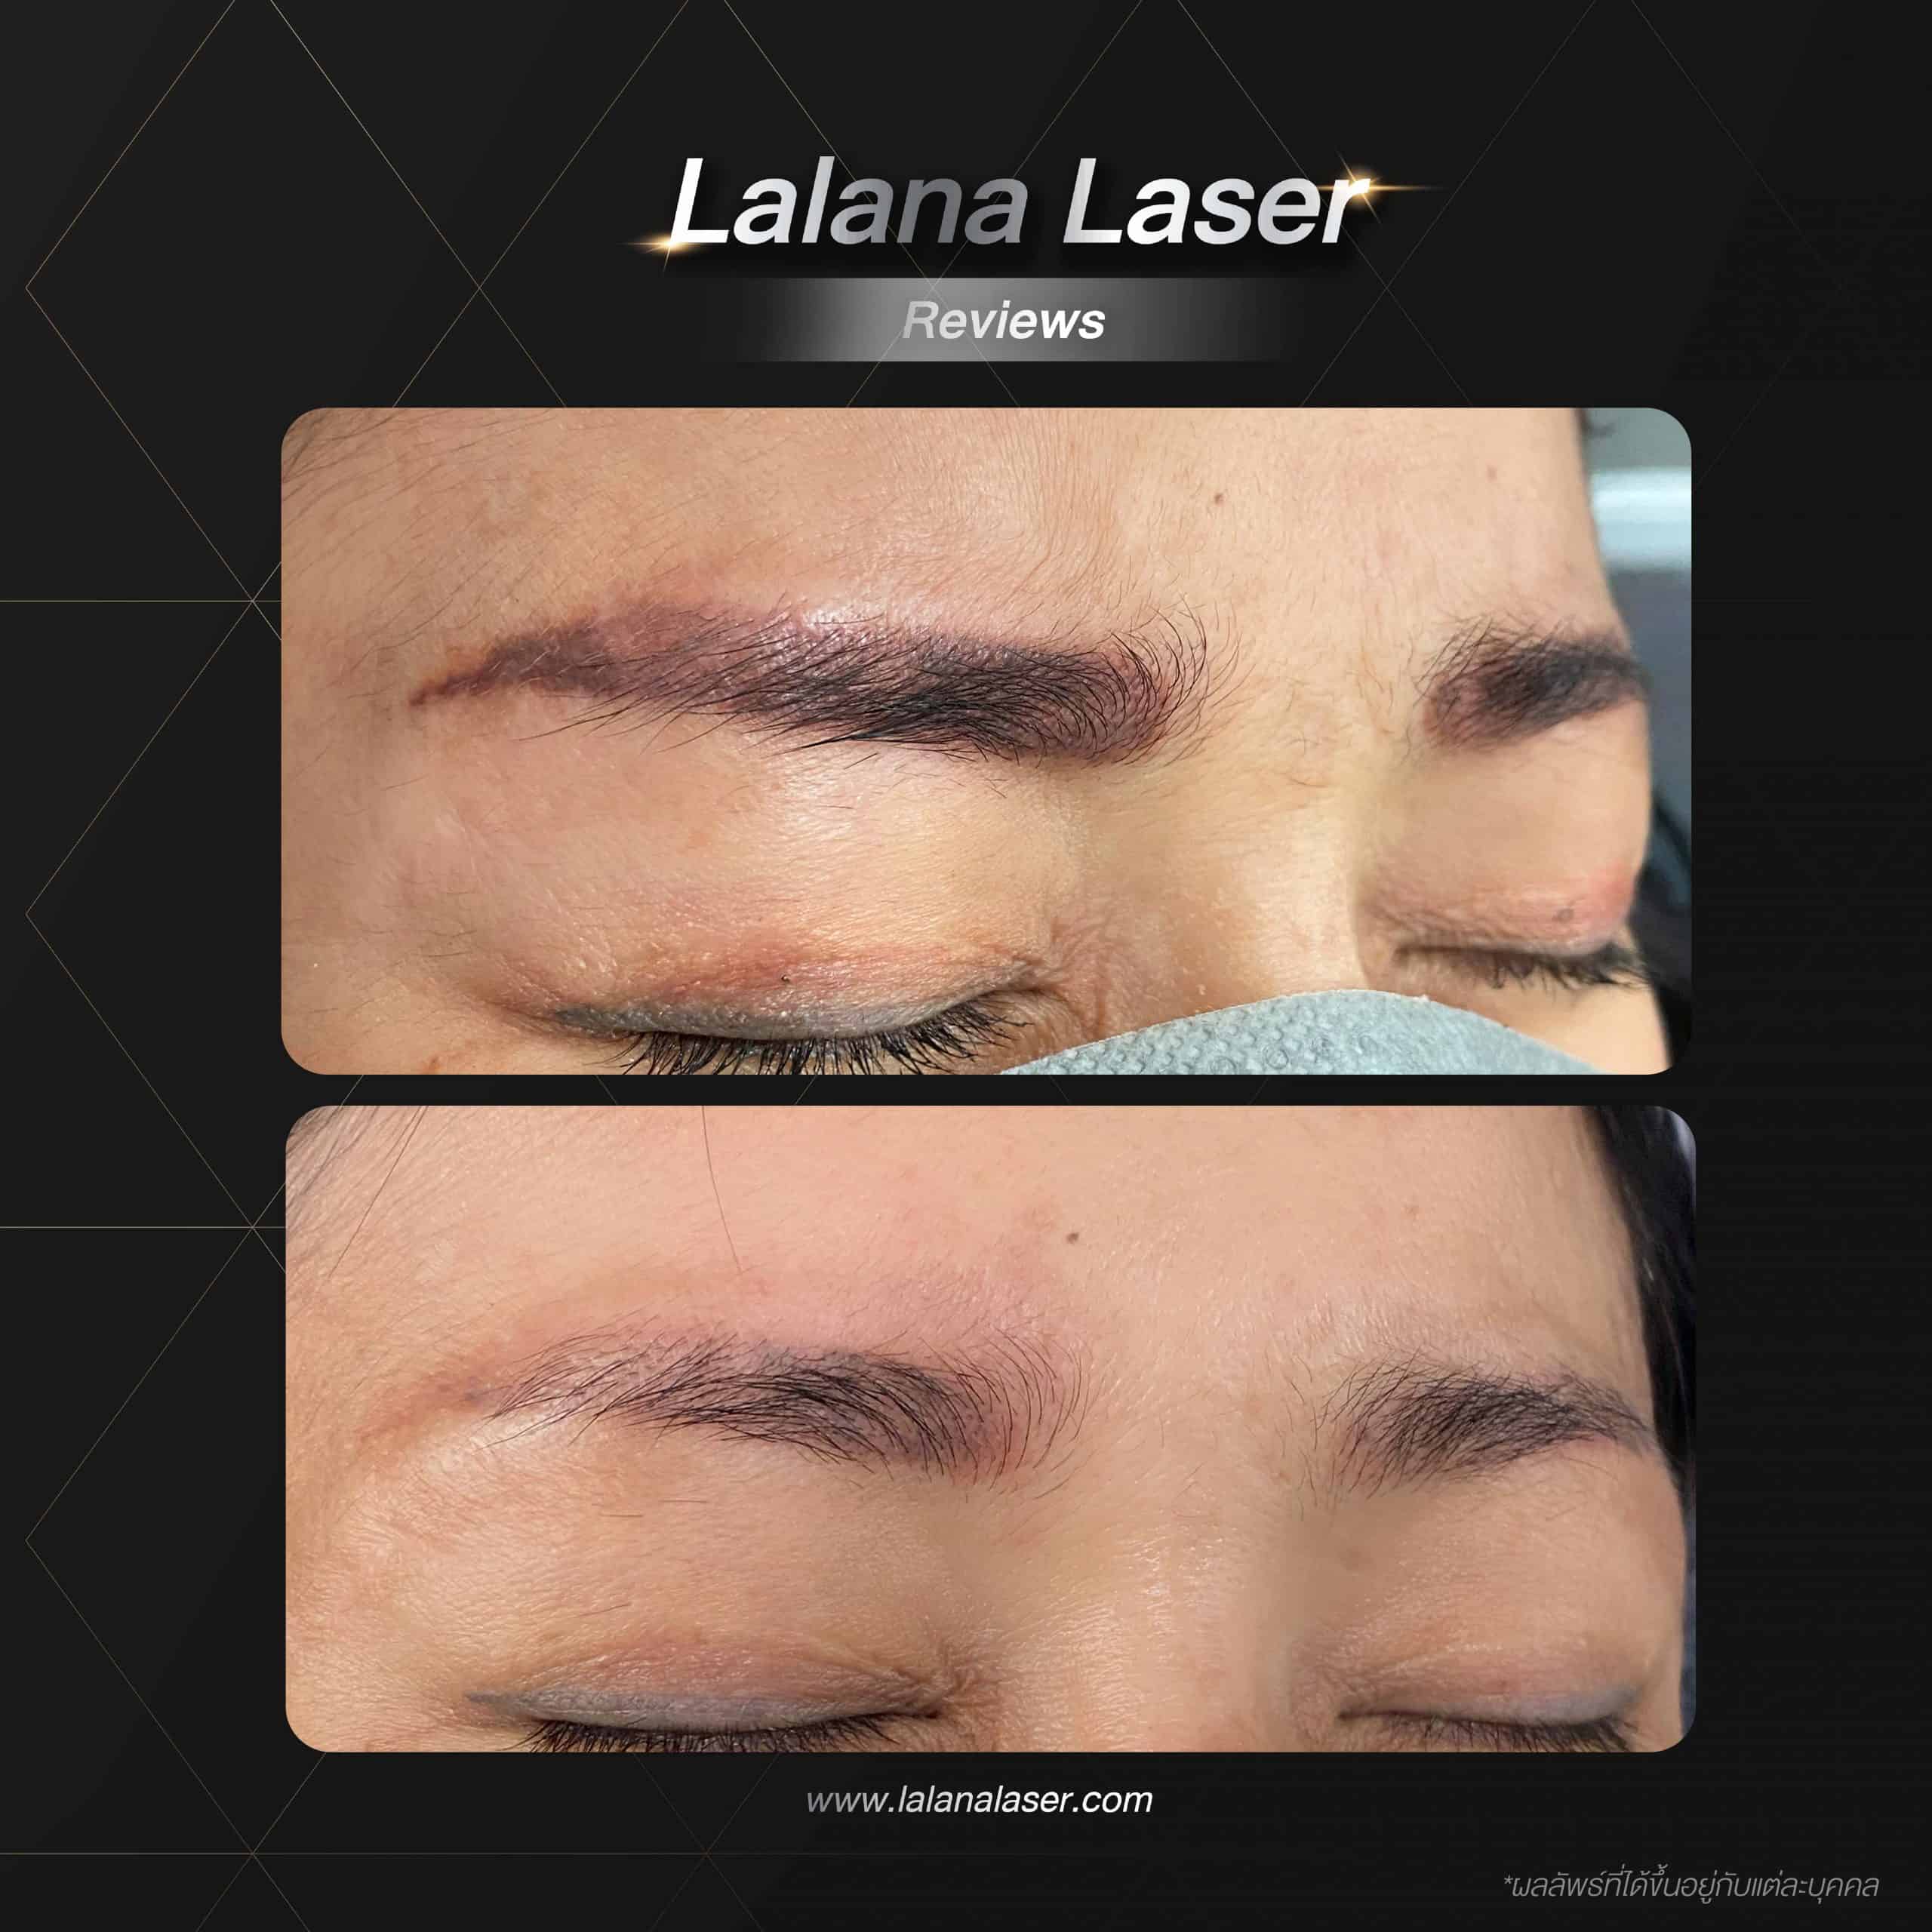 Lalana-laser-reviews-scaled